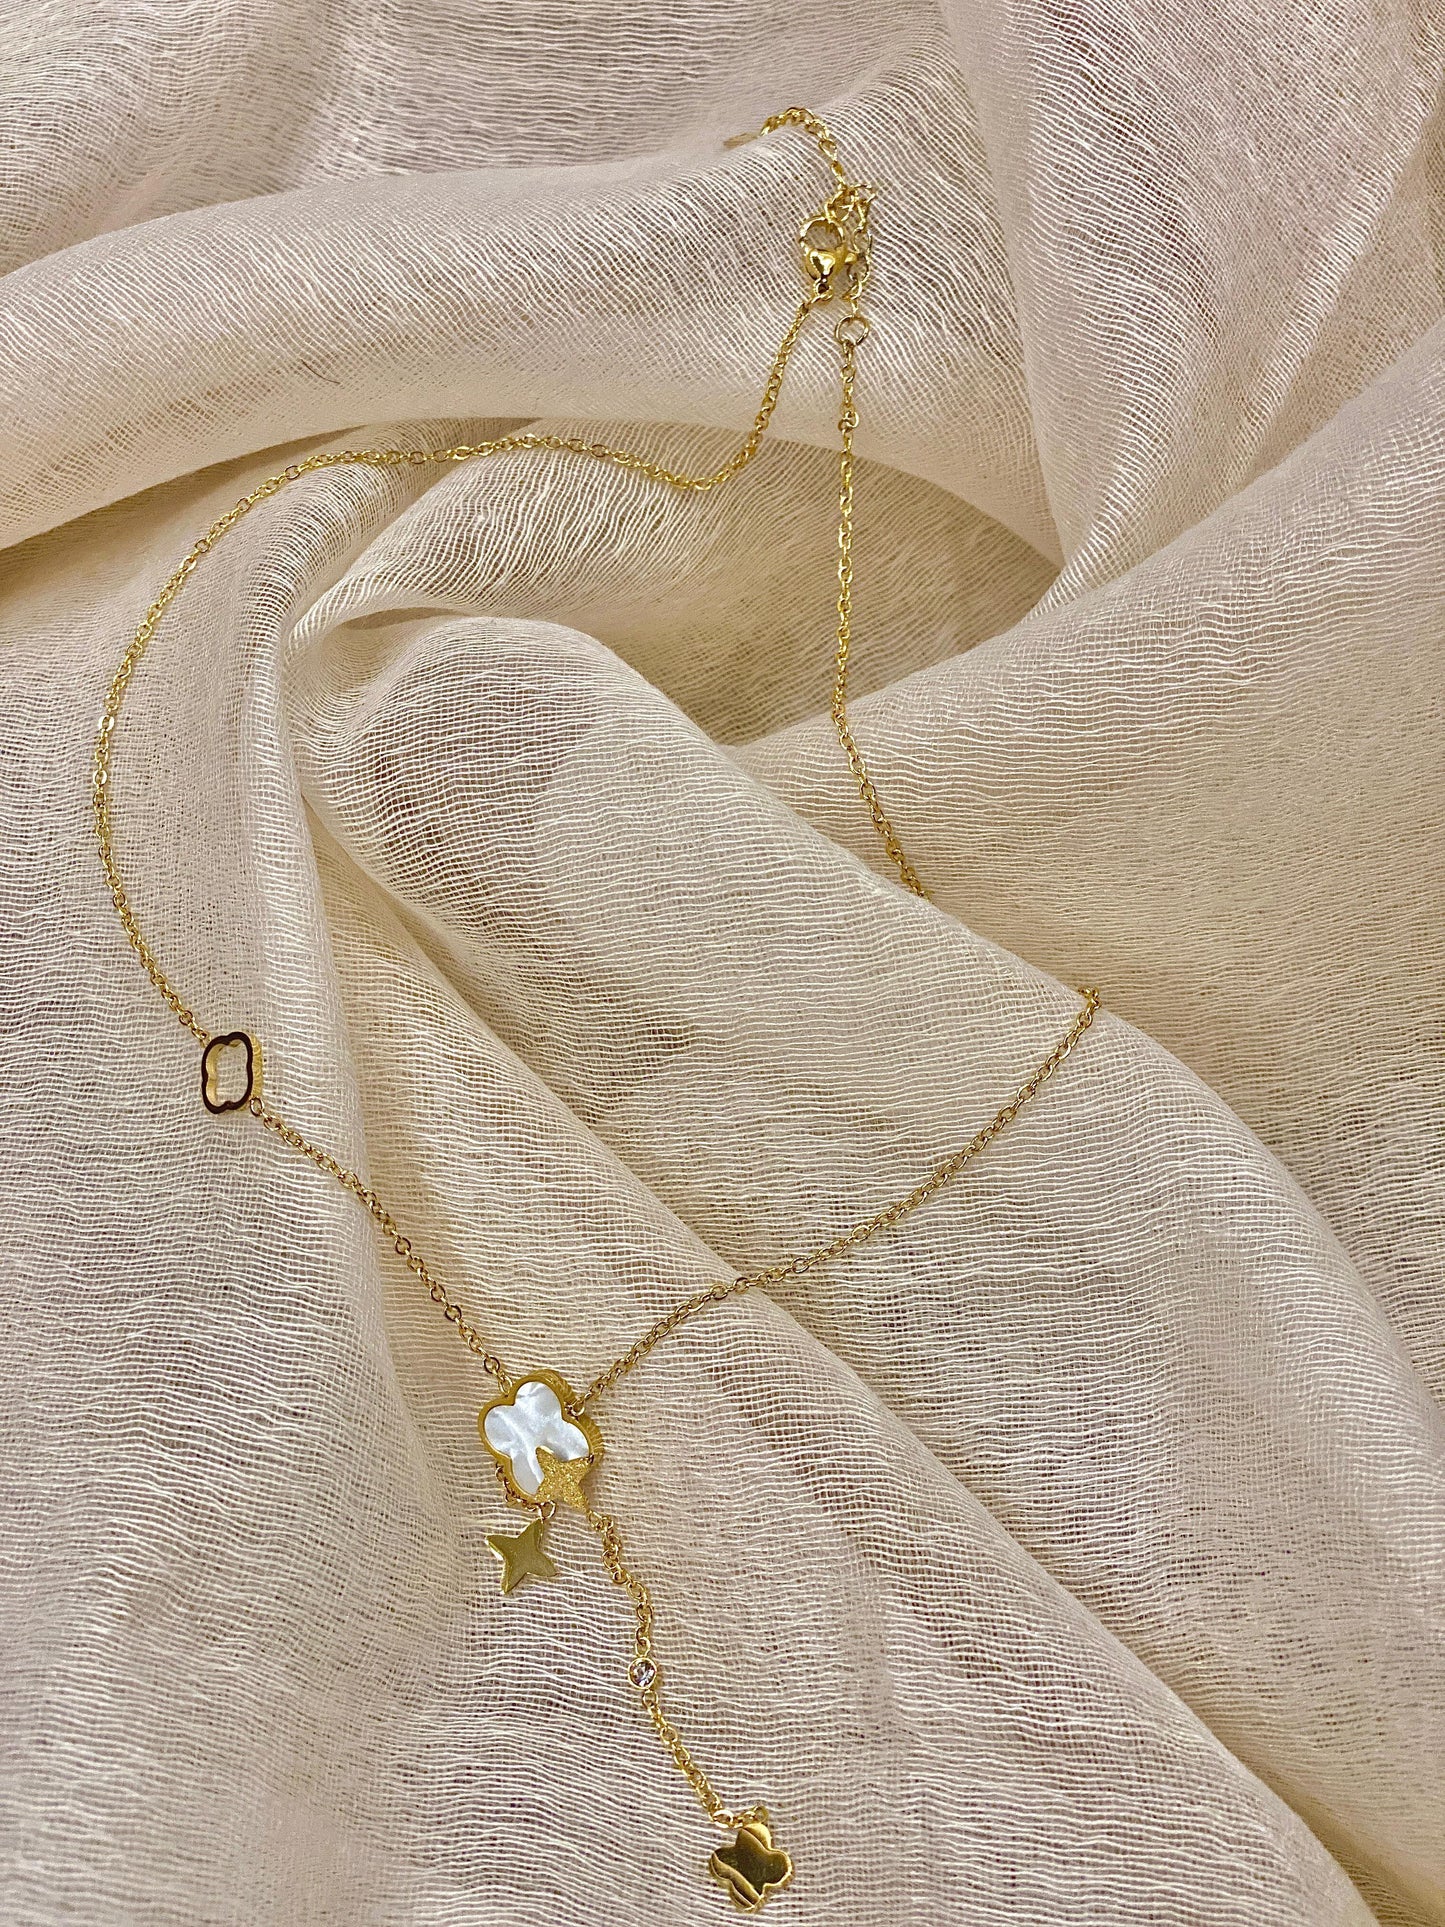 Gold Chain Neckpiece With White & Gold Clover